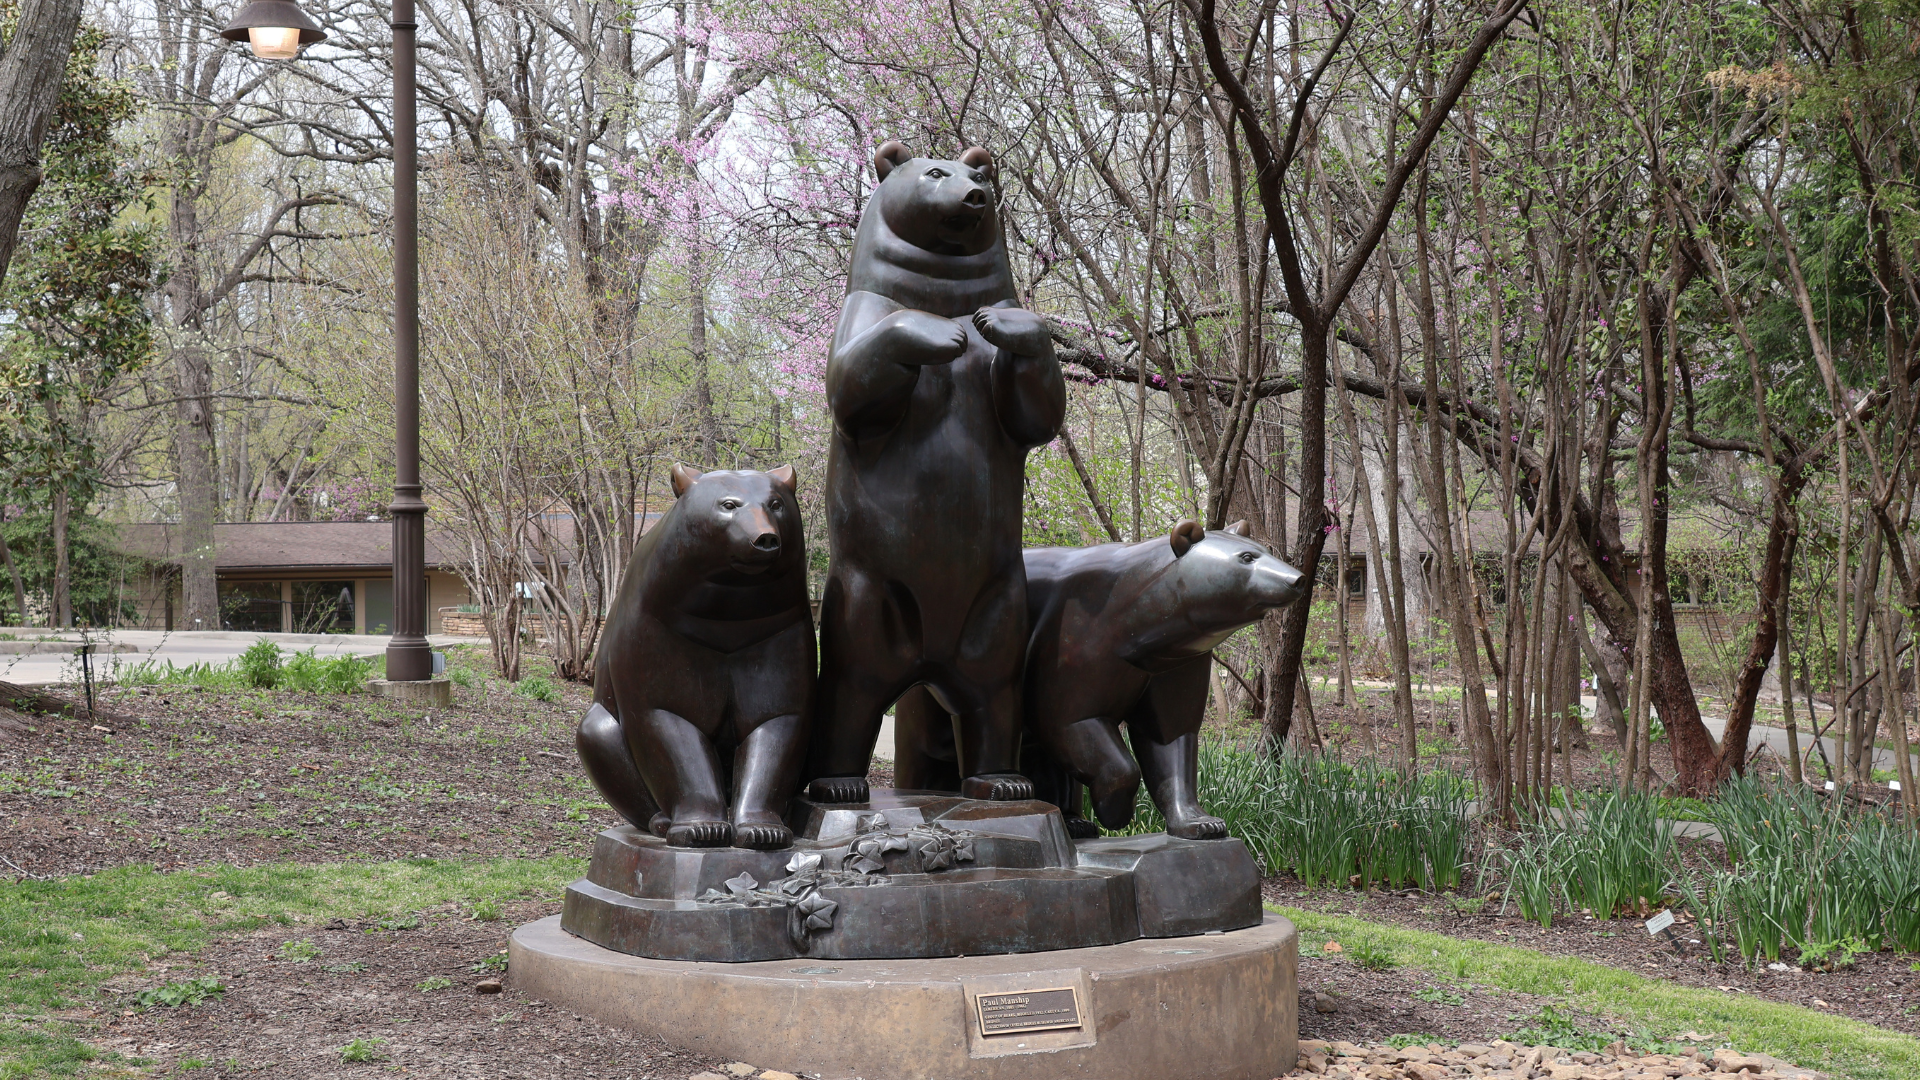 Photo of the Three Bears bronze statue at Compton Gardens & Arboretum in the springtime